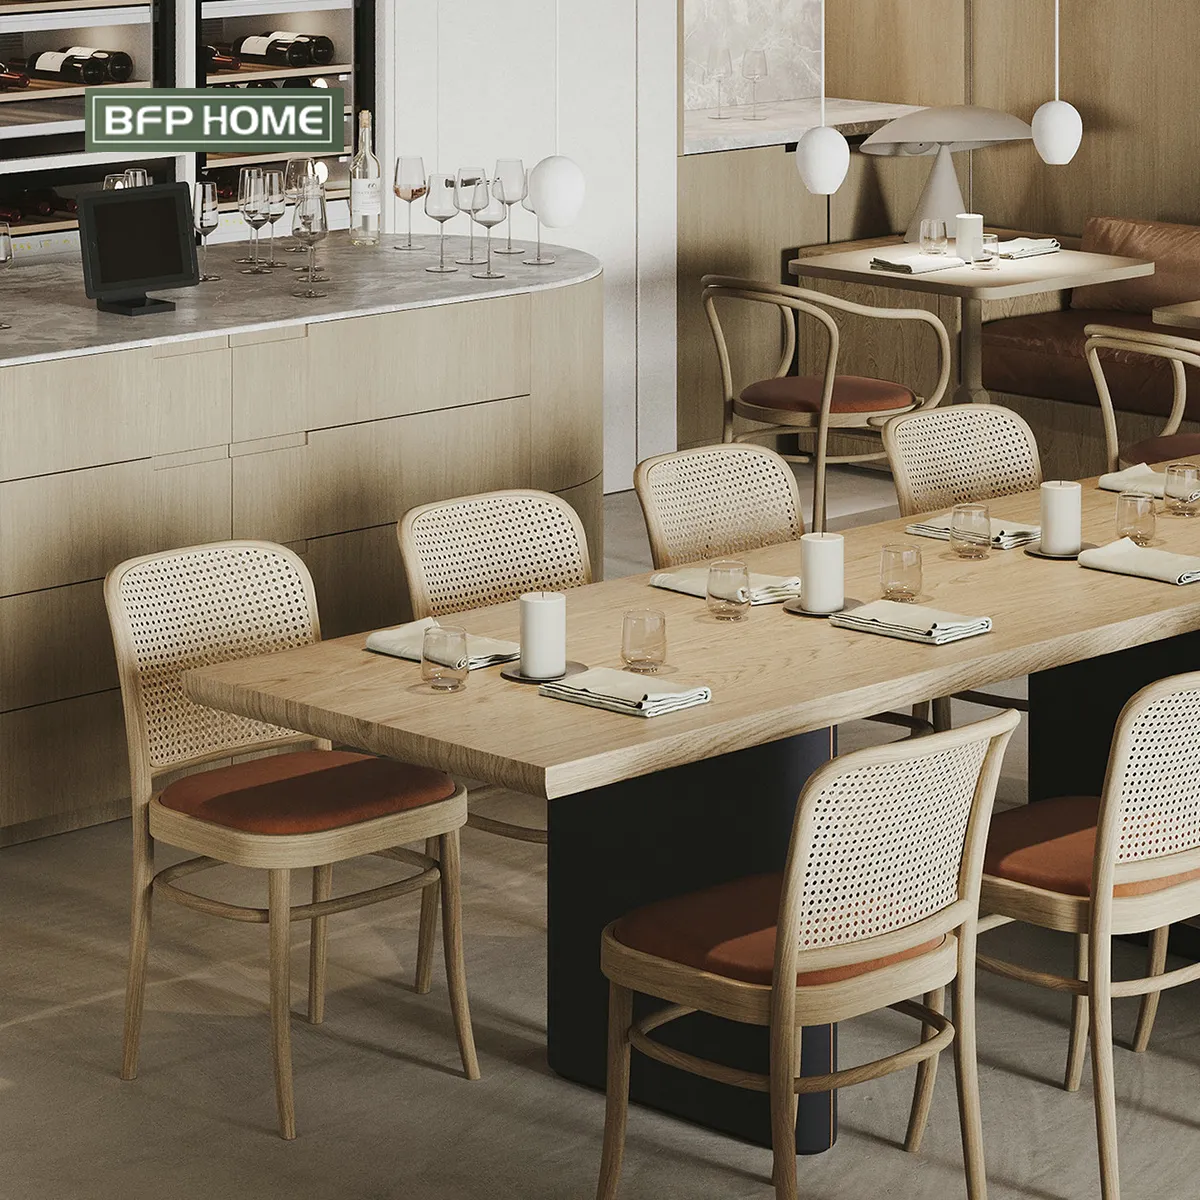 BFP 홈 레스토랑 현대 디자인 커피 테이블 세트 테이블 가구 식당 가구 프로젝트